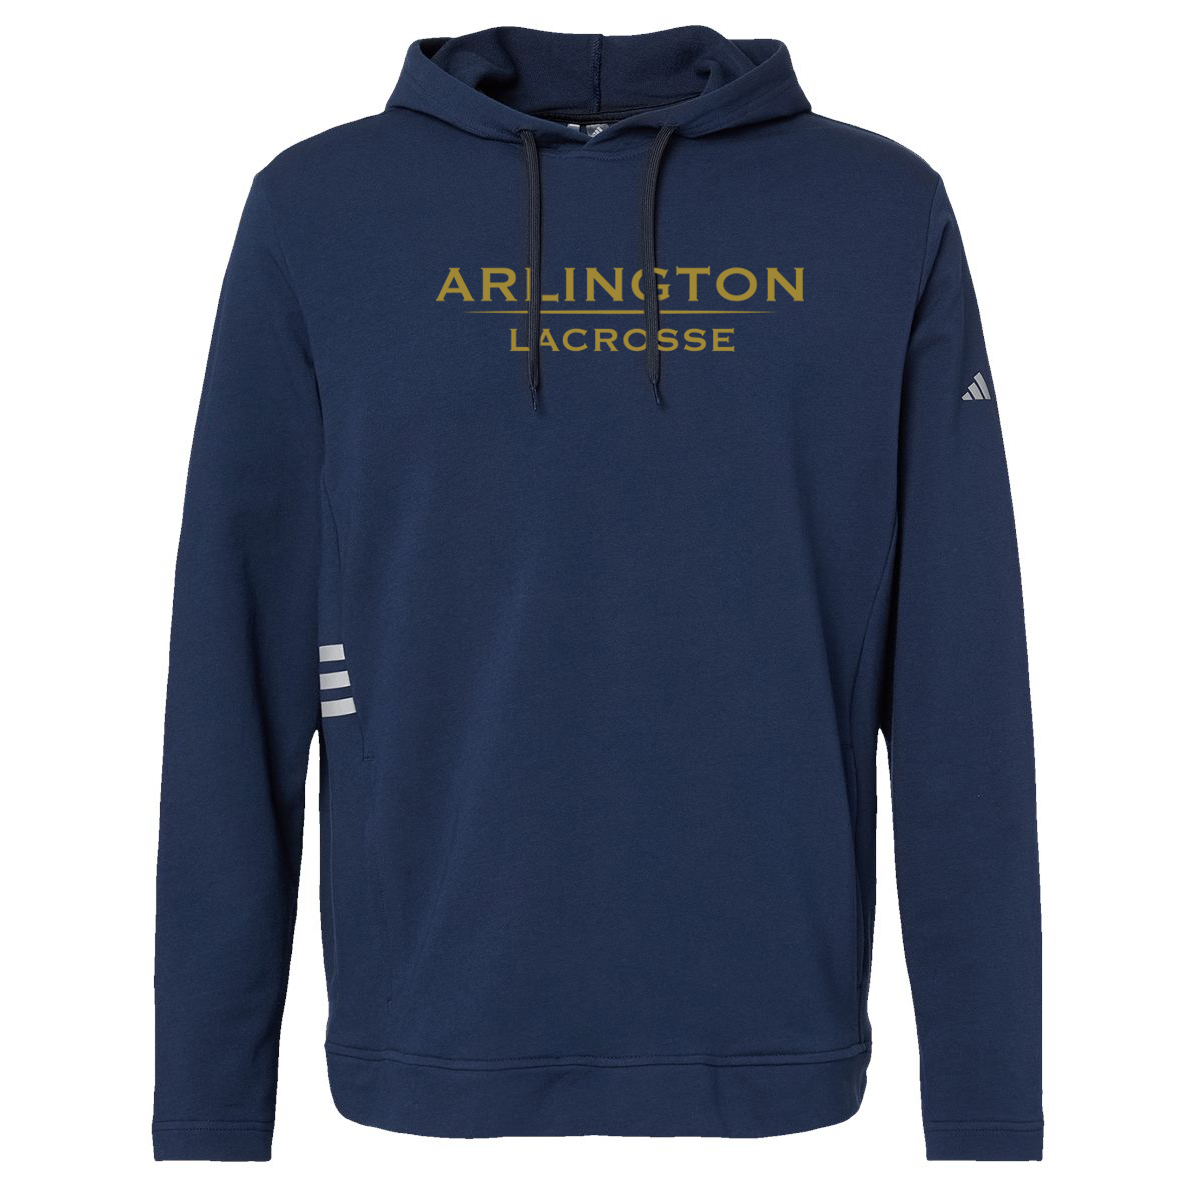 Arlington Lacrosse Adidas Lightweight Sweatshirt